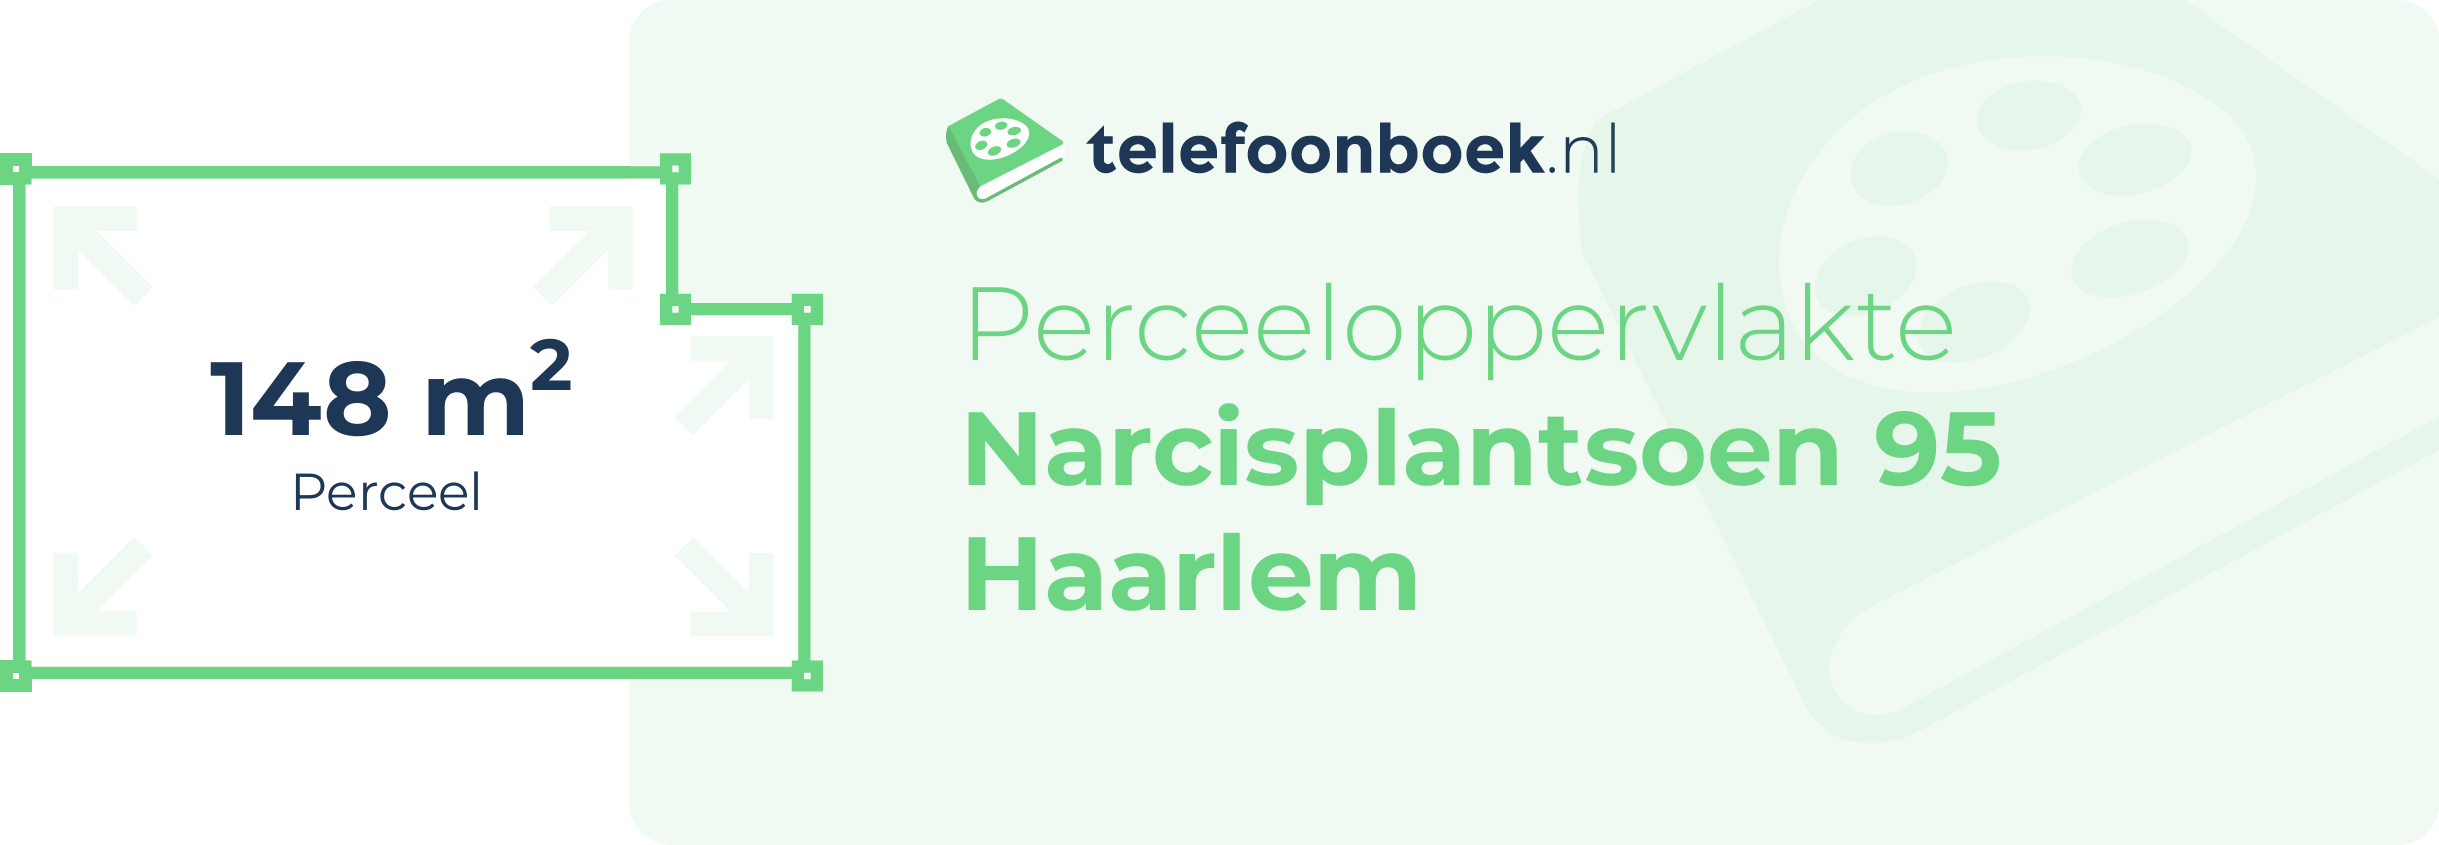 Perceeloppervlakte Narcisplantsoen 95 Haarlem